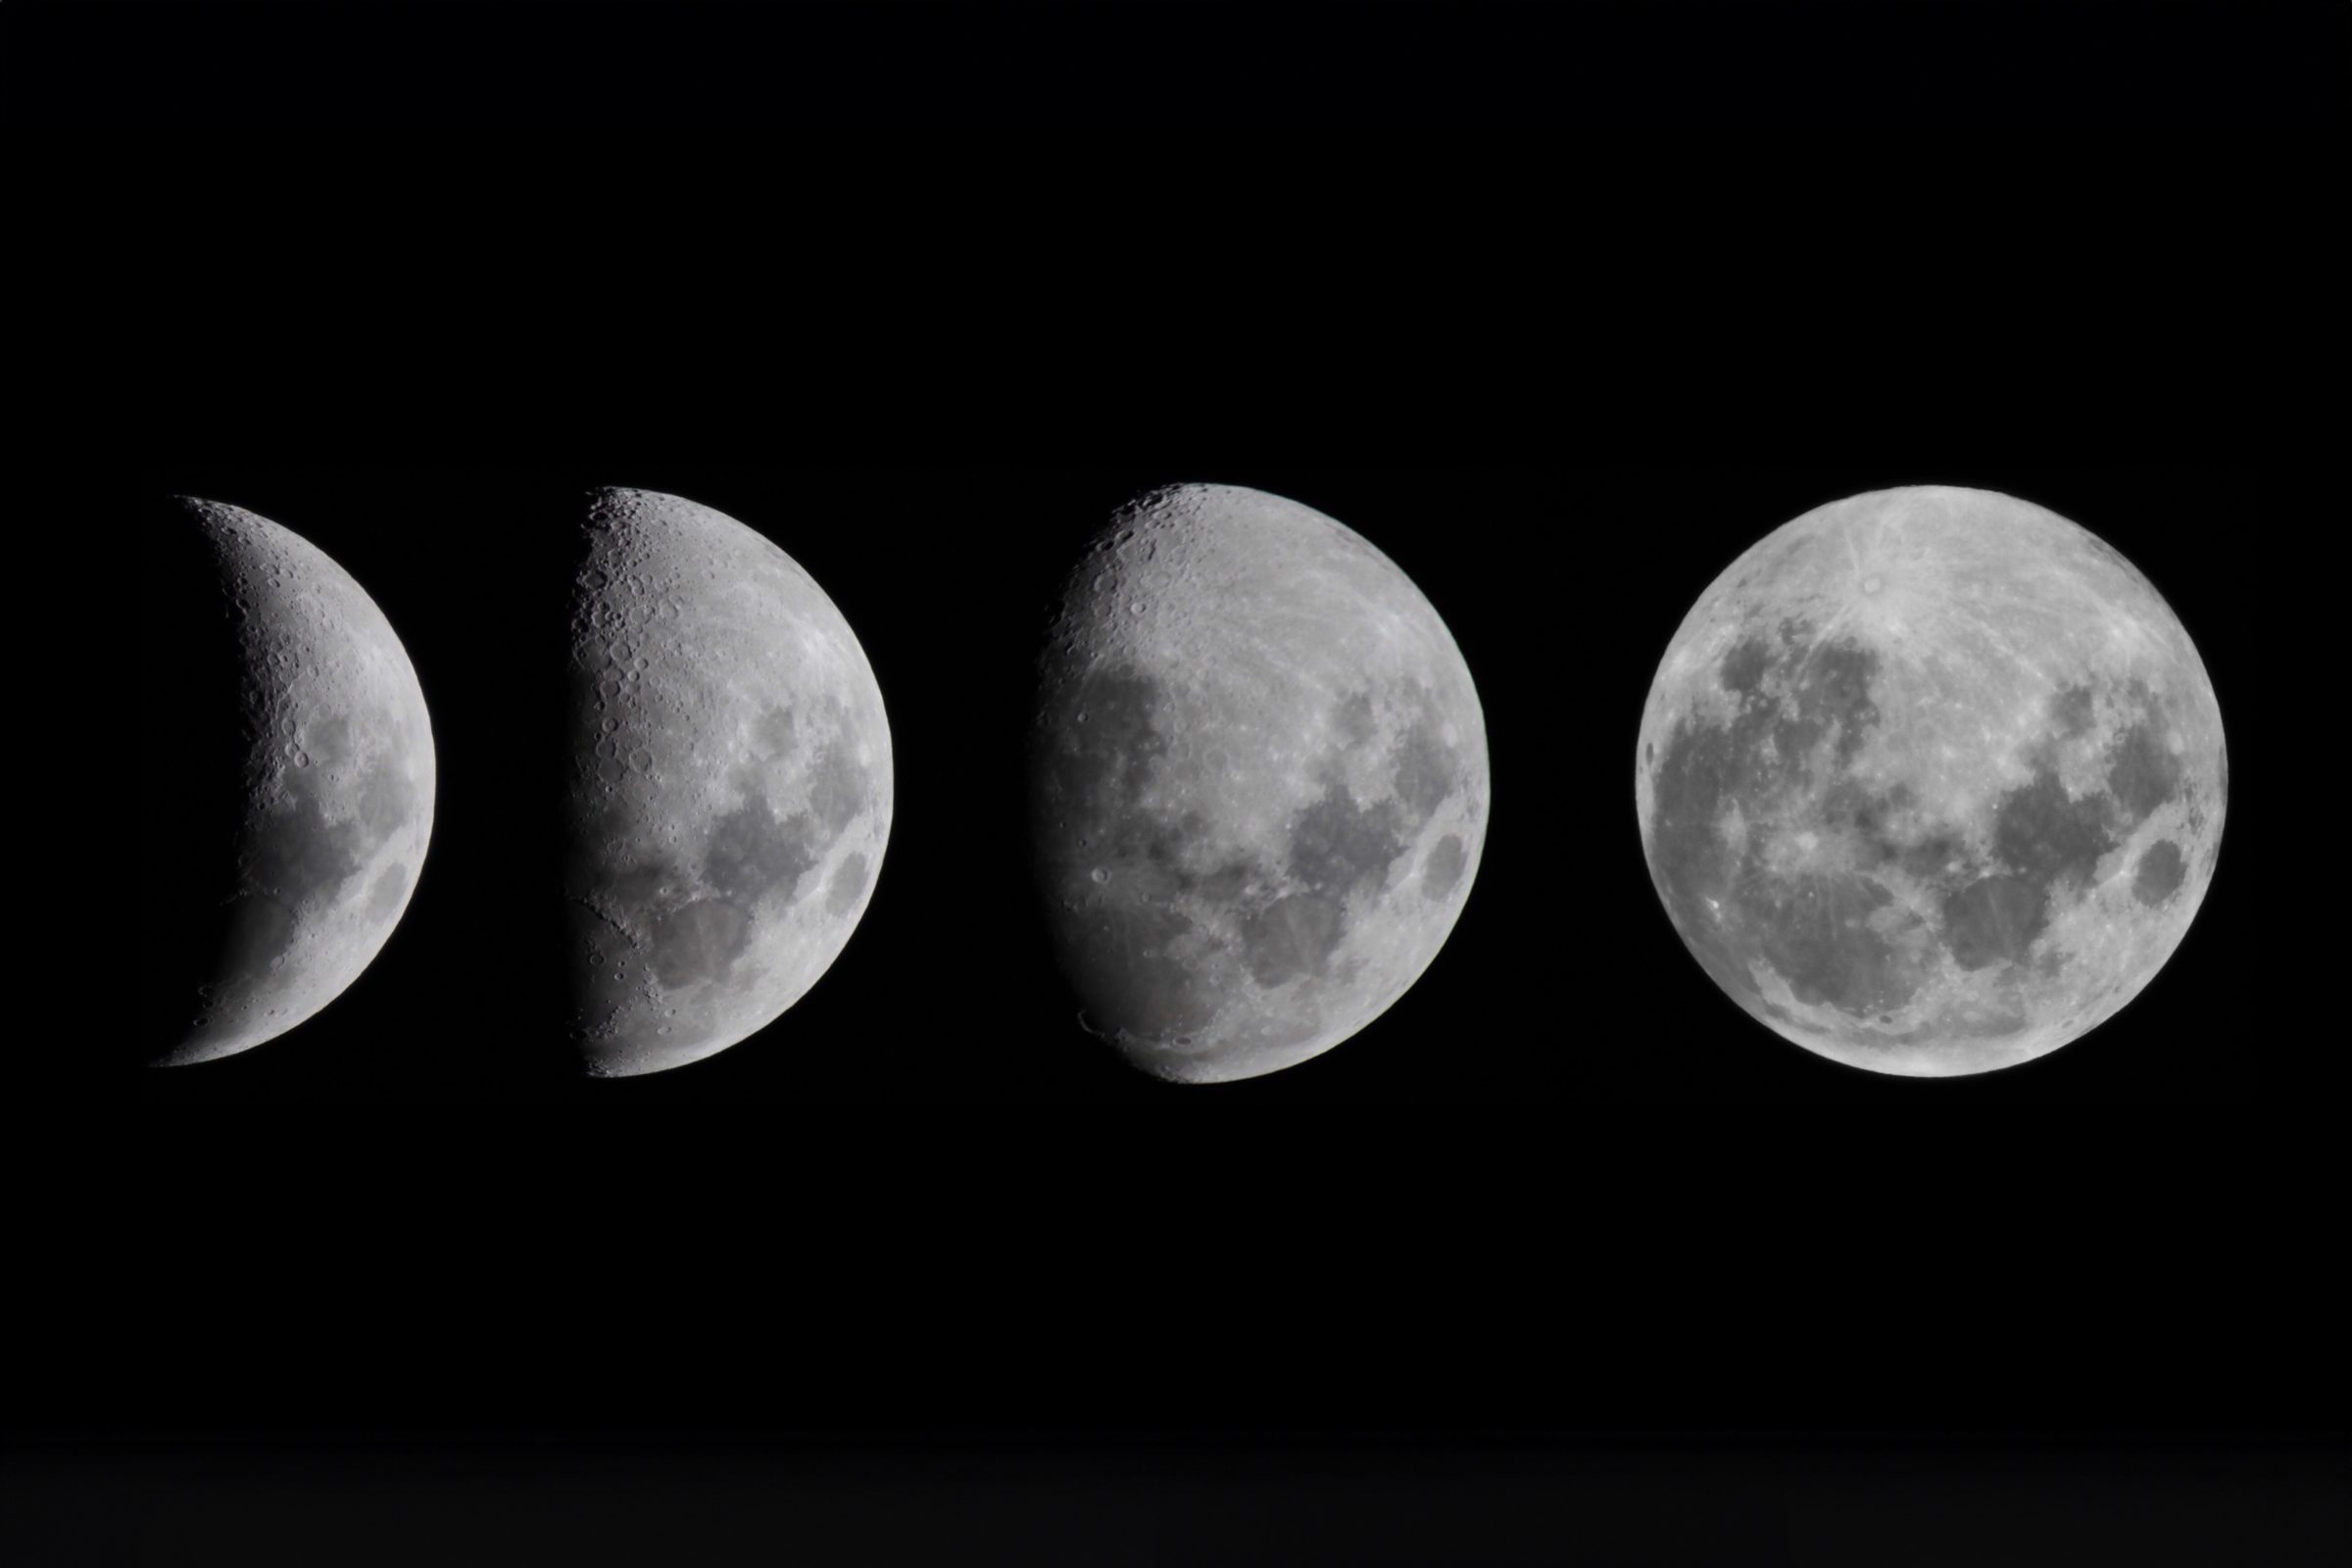 4 moon phases on black